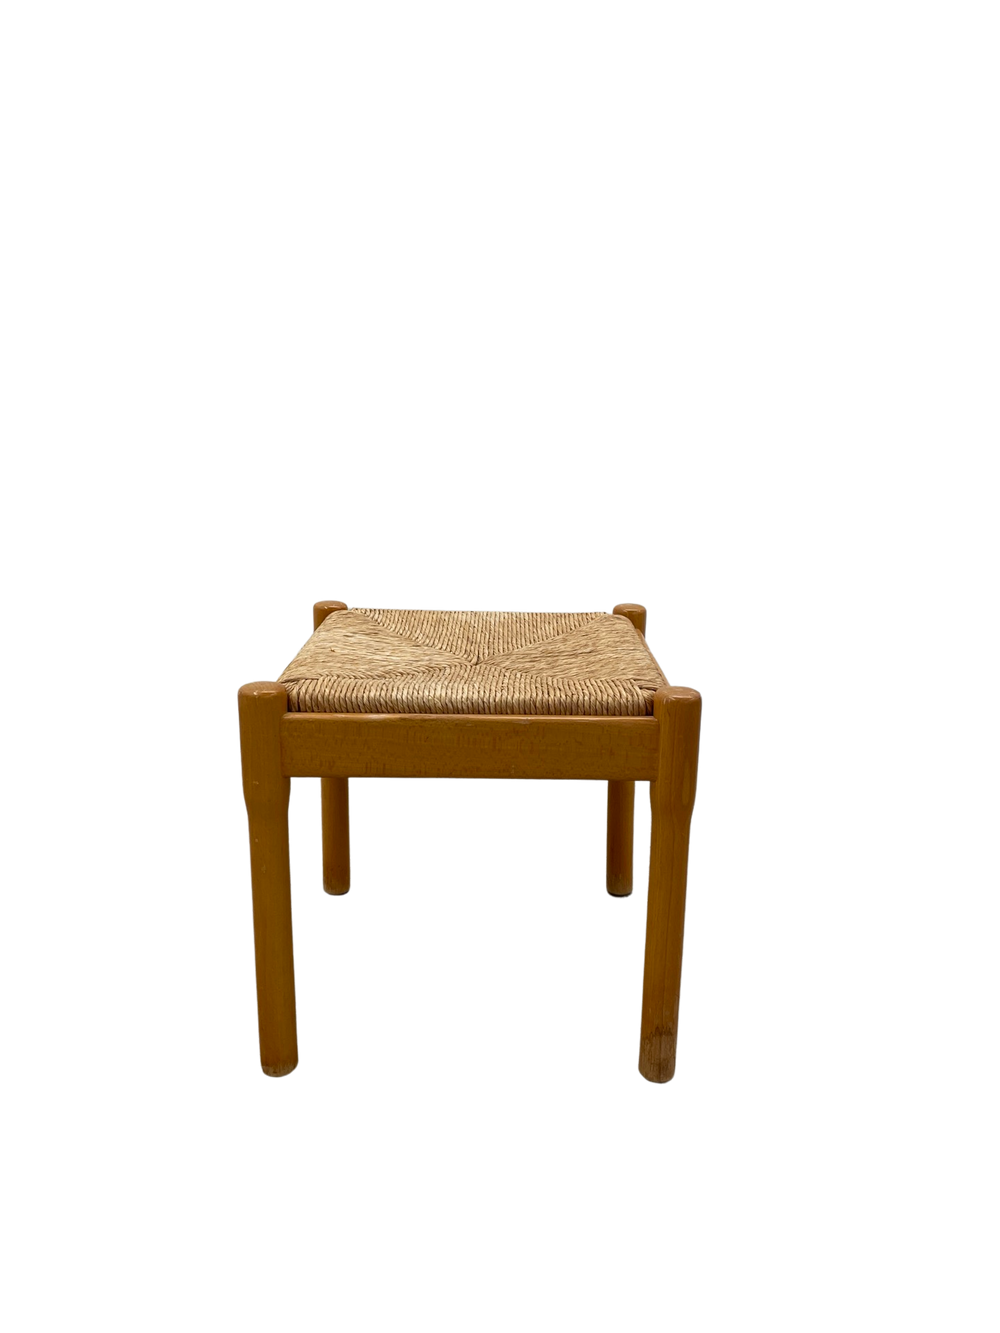 Vico Magistretti “Carimate” stool for Cassina, Italy, 1970s